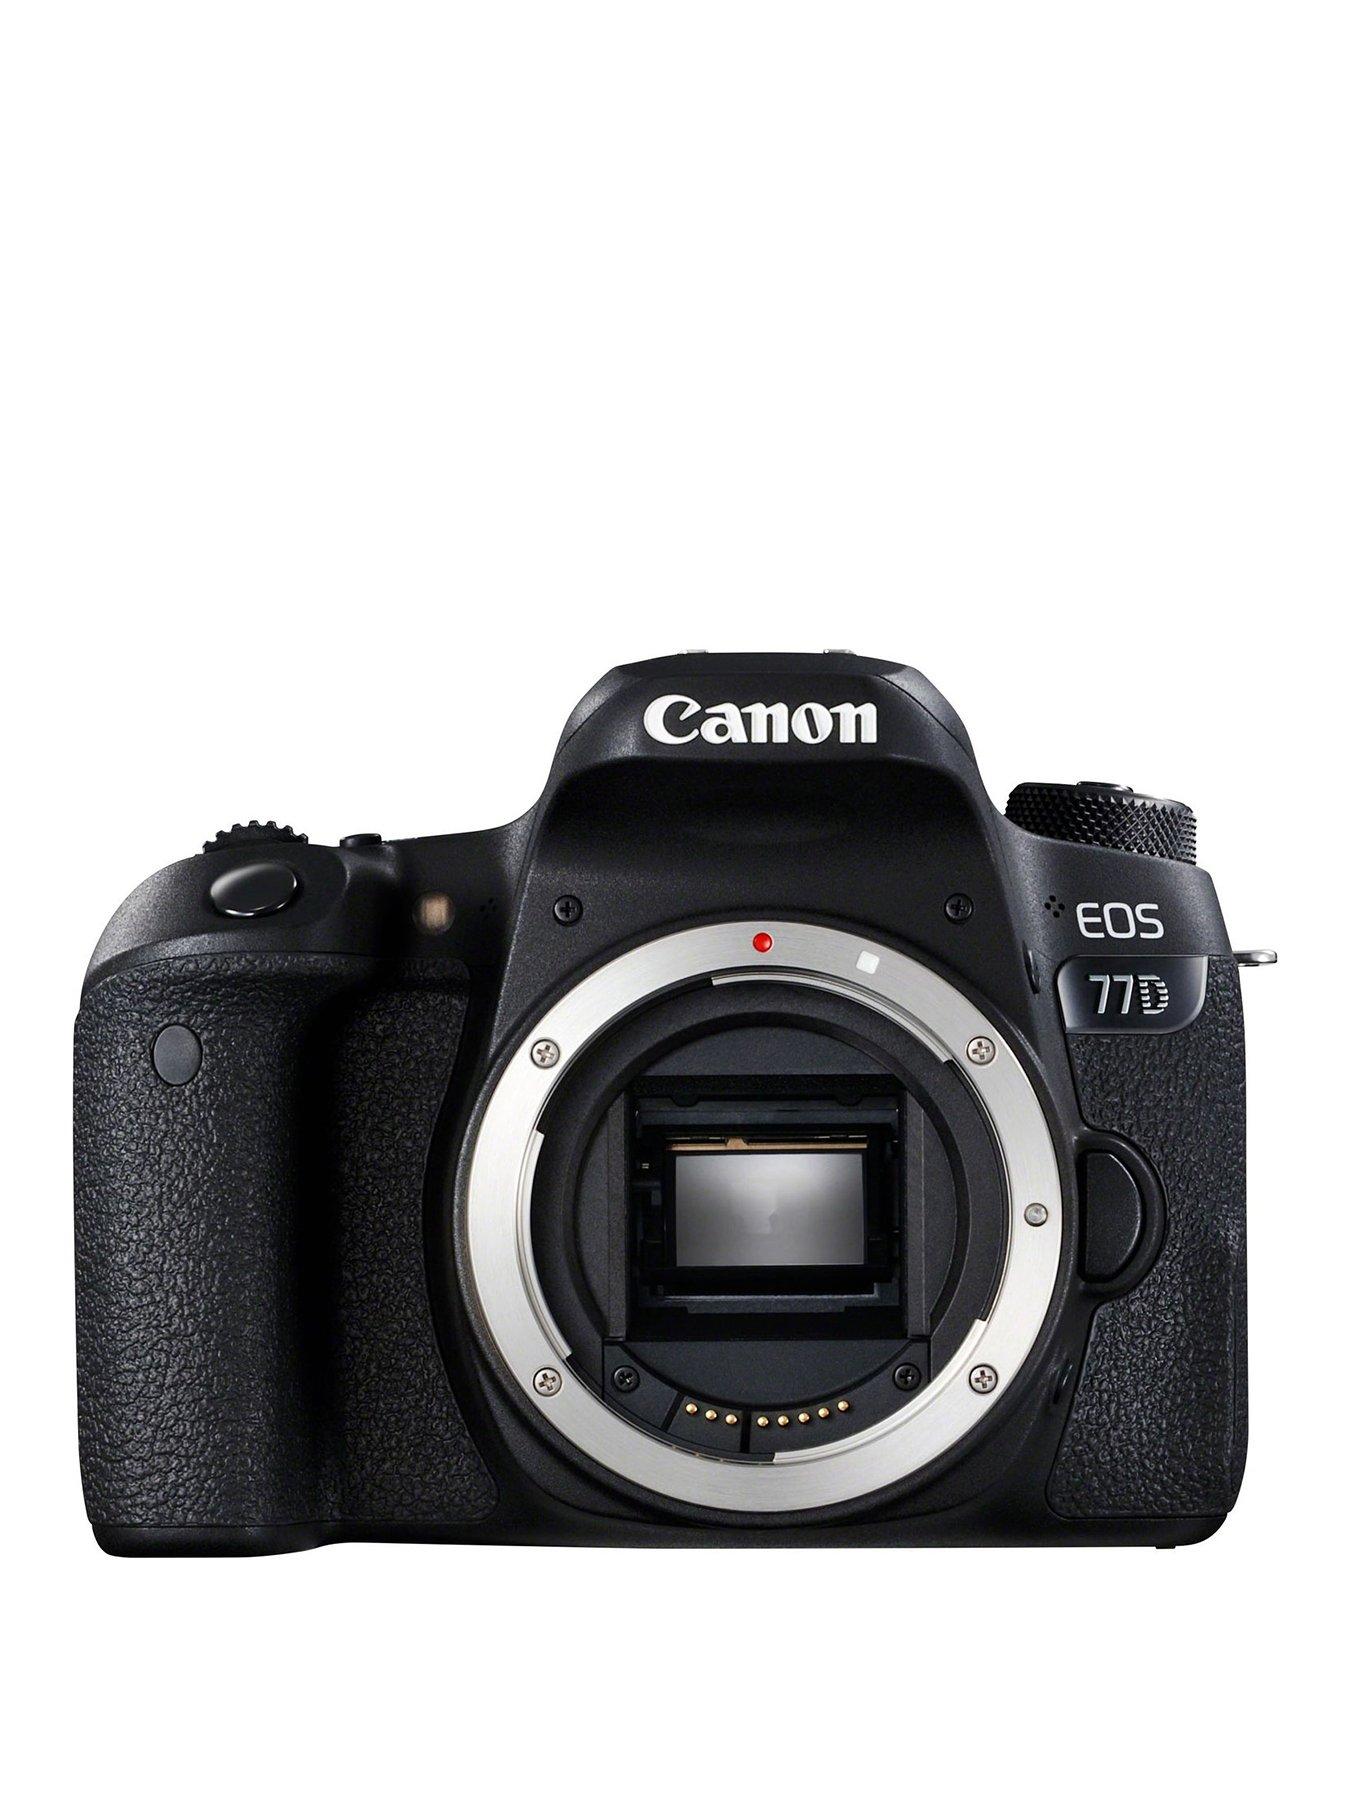 Canon Eos 77D Slr Camera Body Only – Black